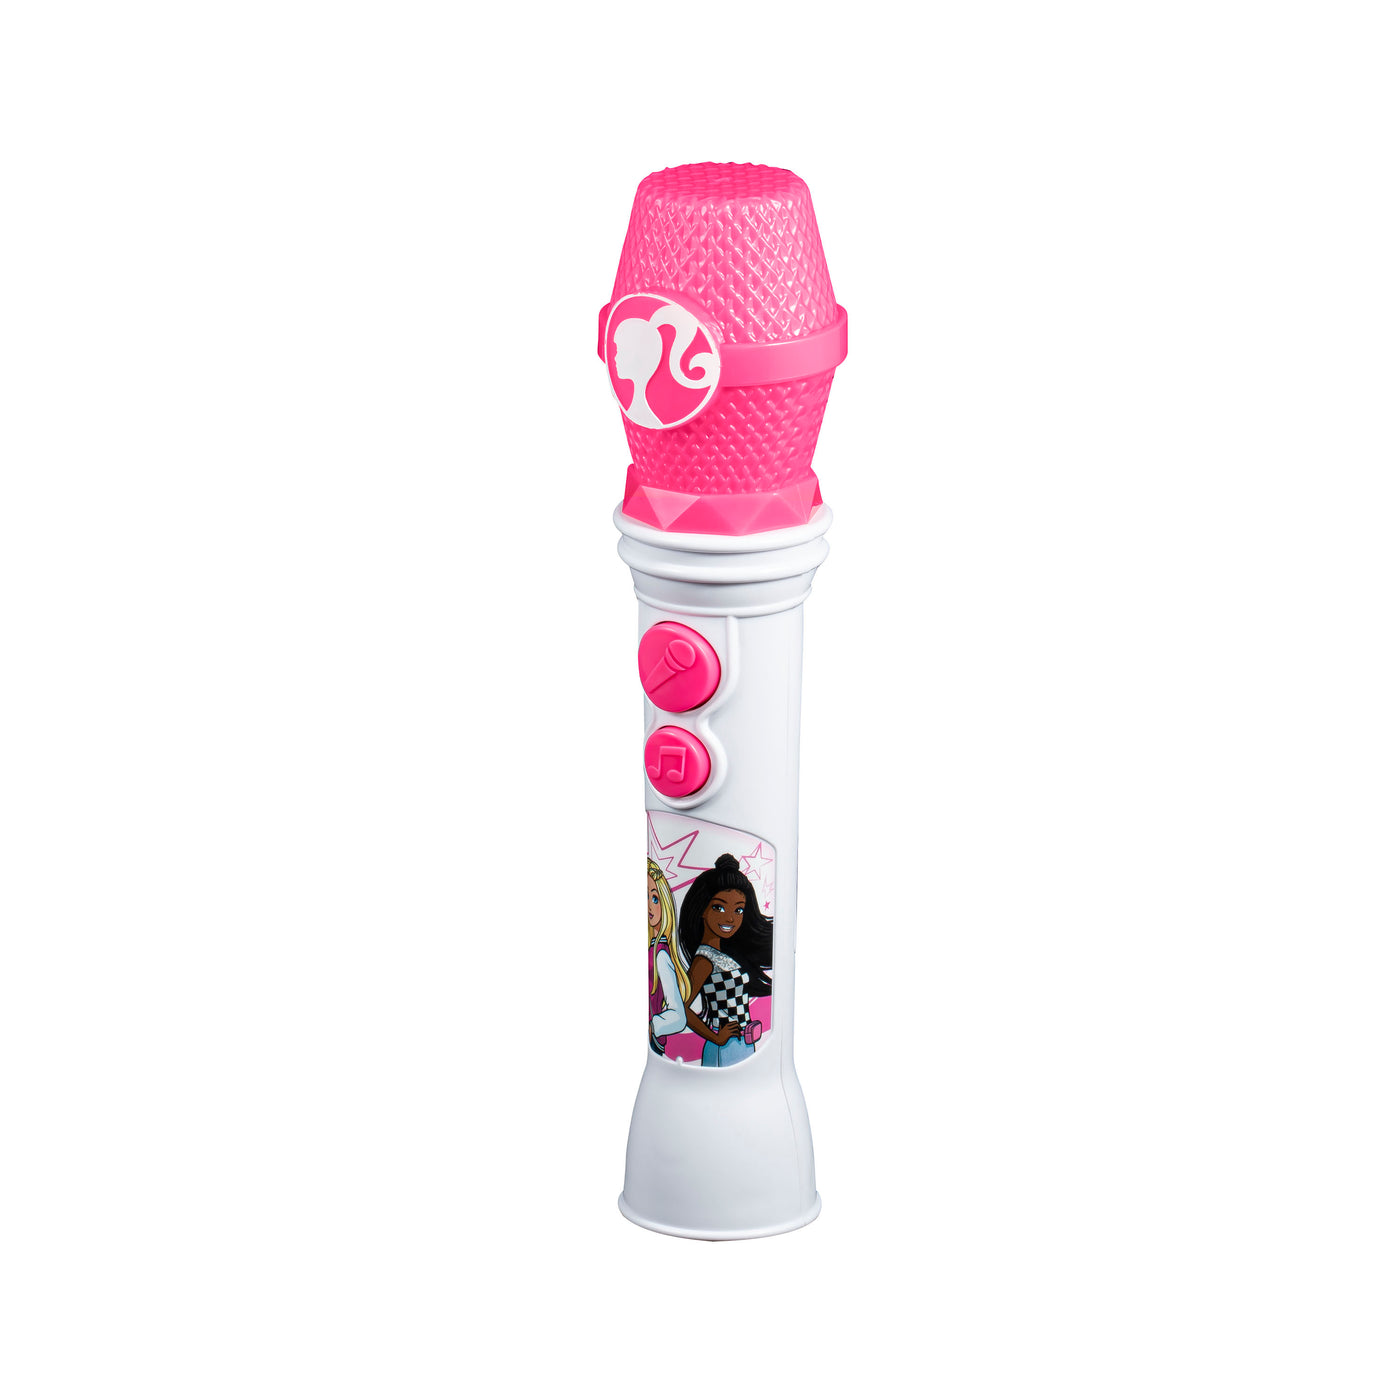 Barbie Karaoke Microphone Toy for Kids